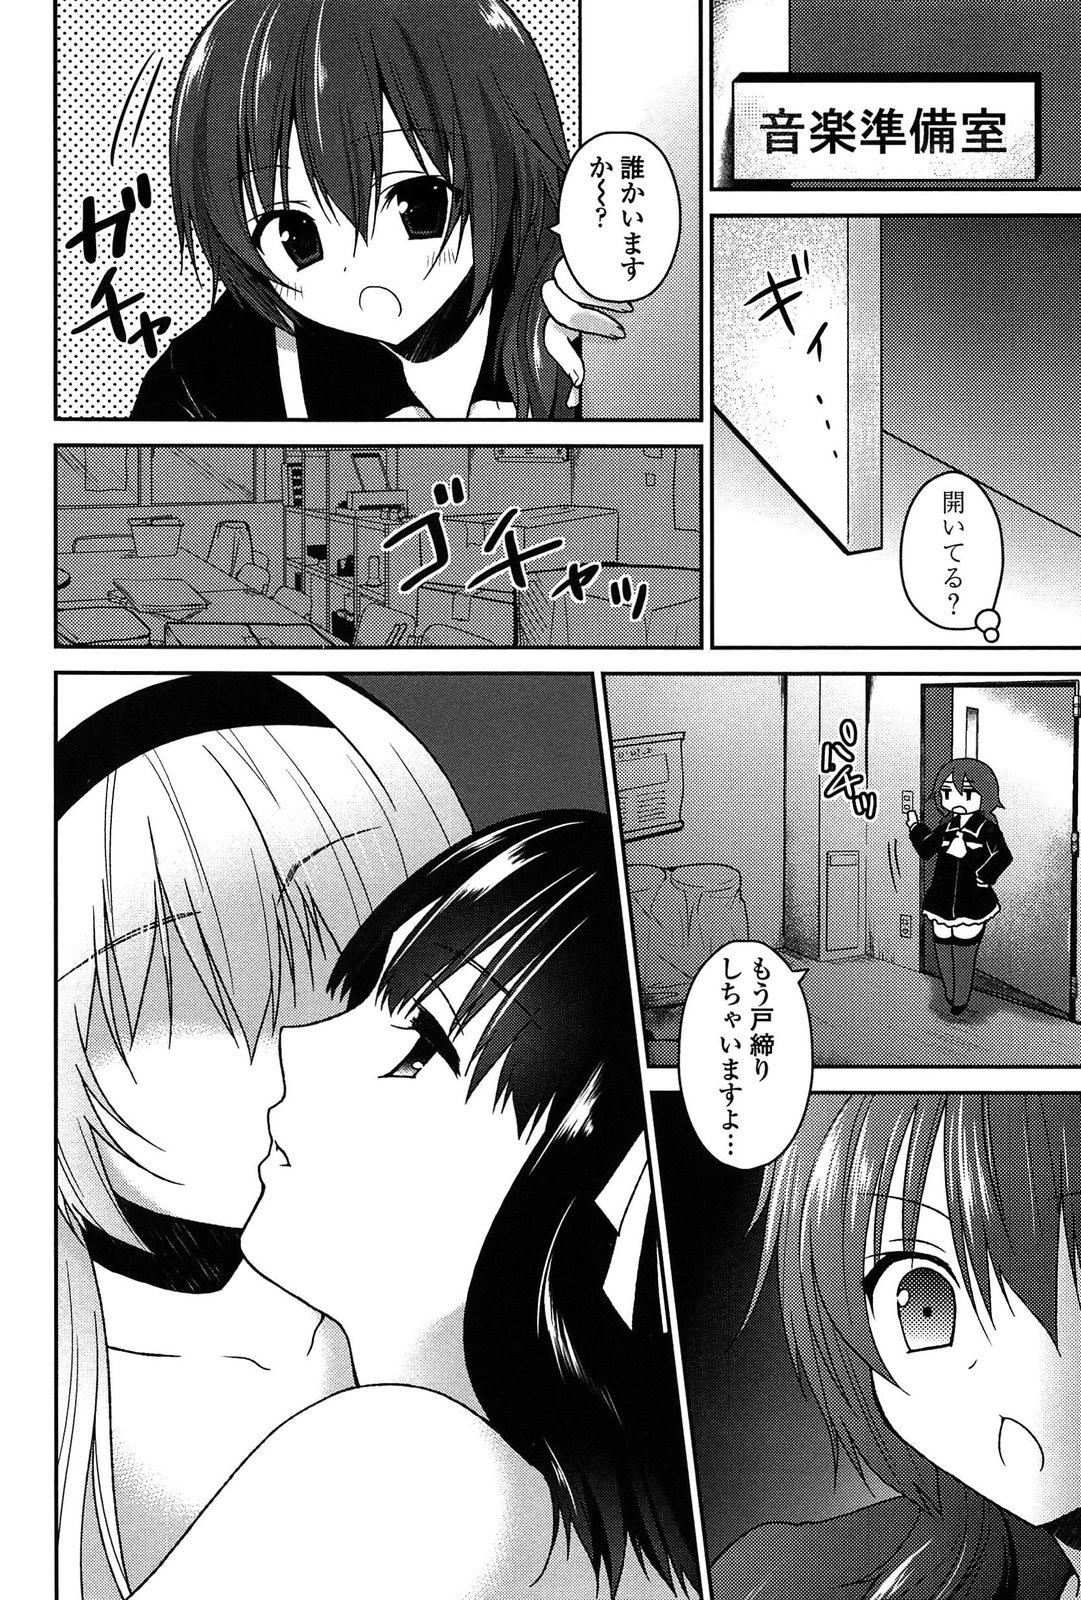 [Amanagi Seiji] Kiss Shite Sawatte Motto Shite 89